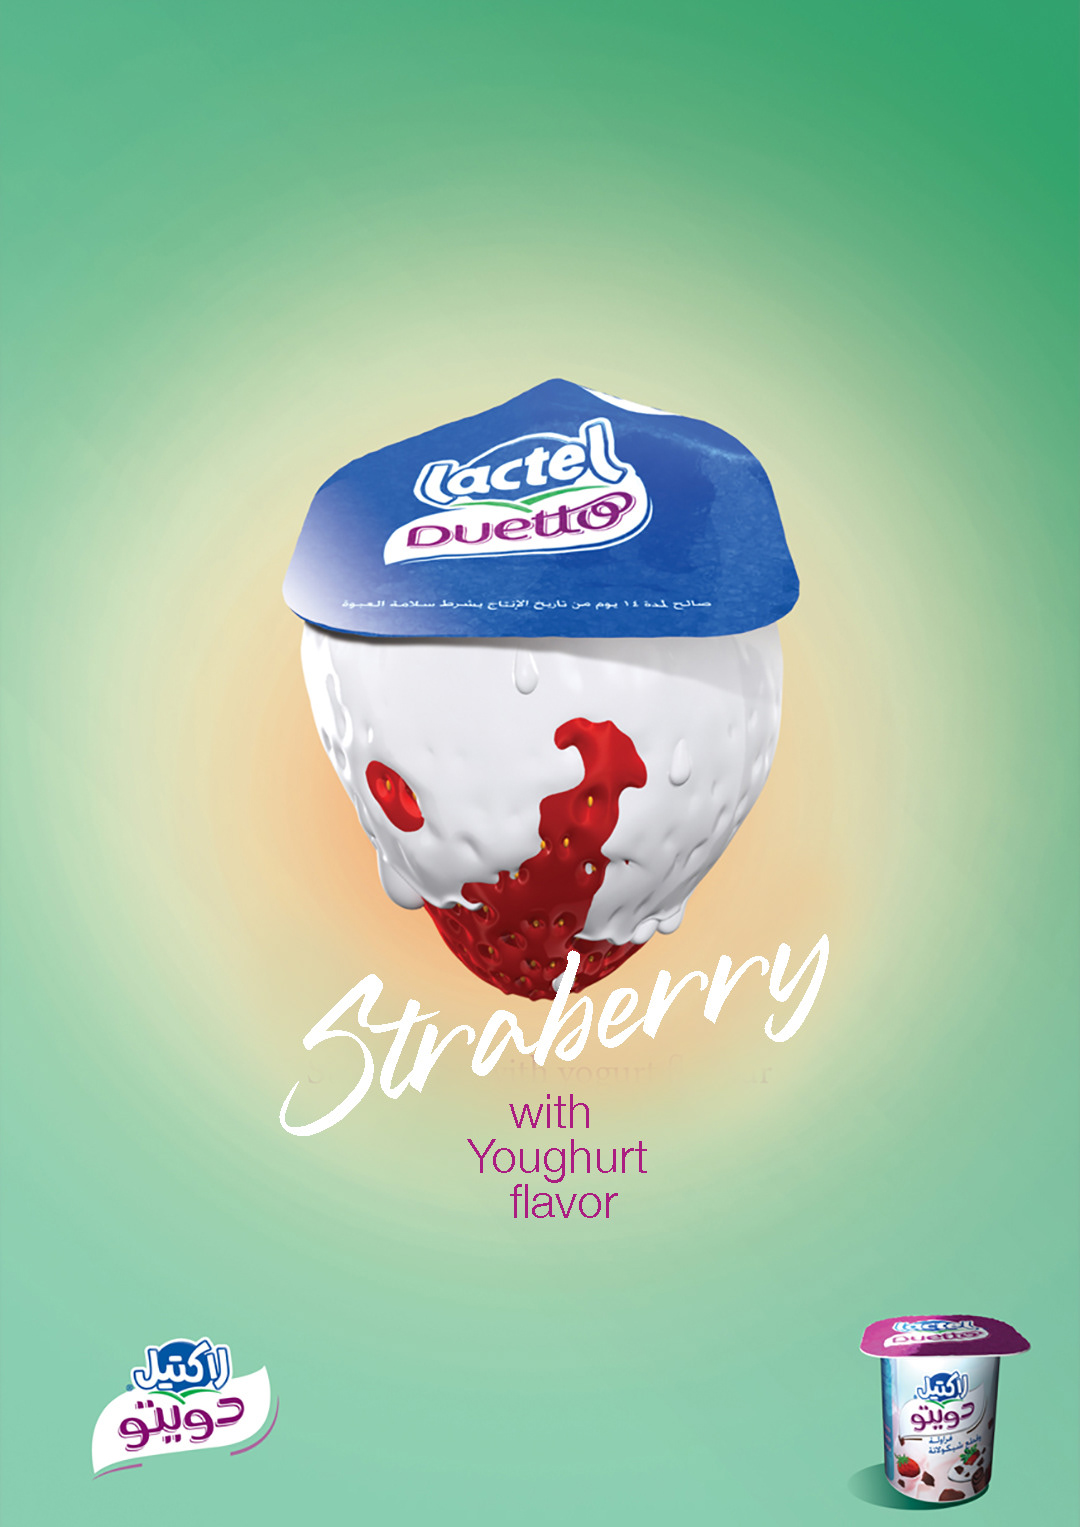 campaign creative duetto fruit chunks fruits lactel peach Pinacolada strawberry yougurt